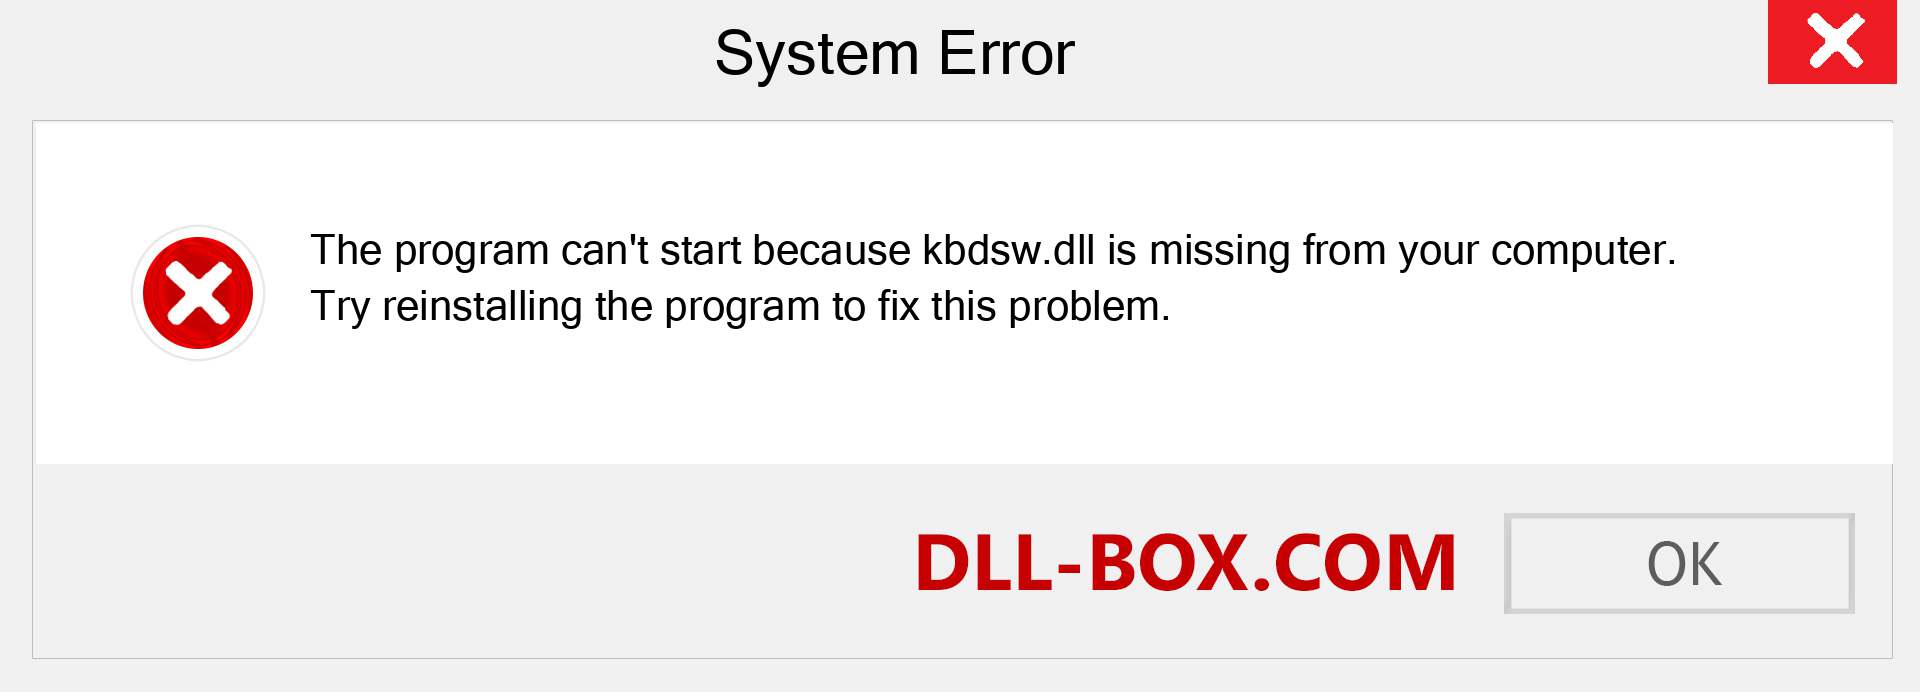  kbdsw.dll file is missing?. Download for Windows 7, 8, 10 - Fix  kbdsw dll Missing Error on Windows, photos, images